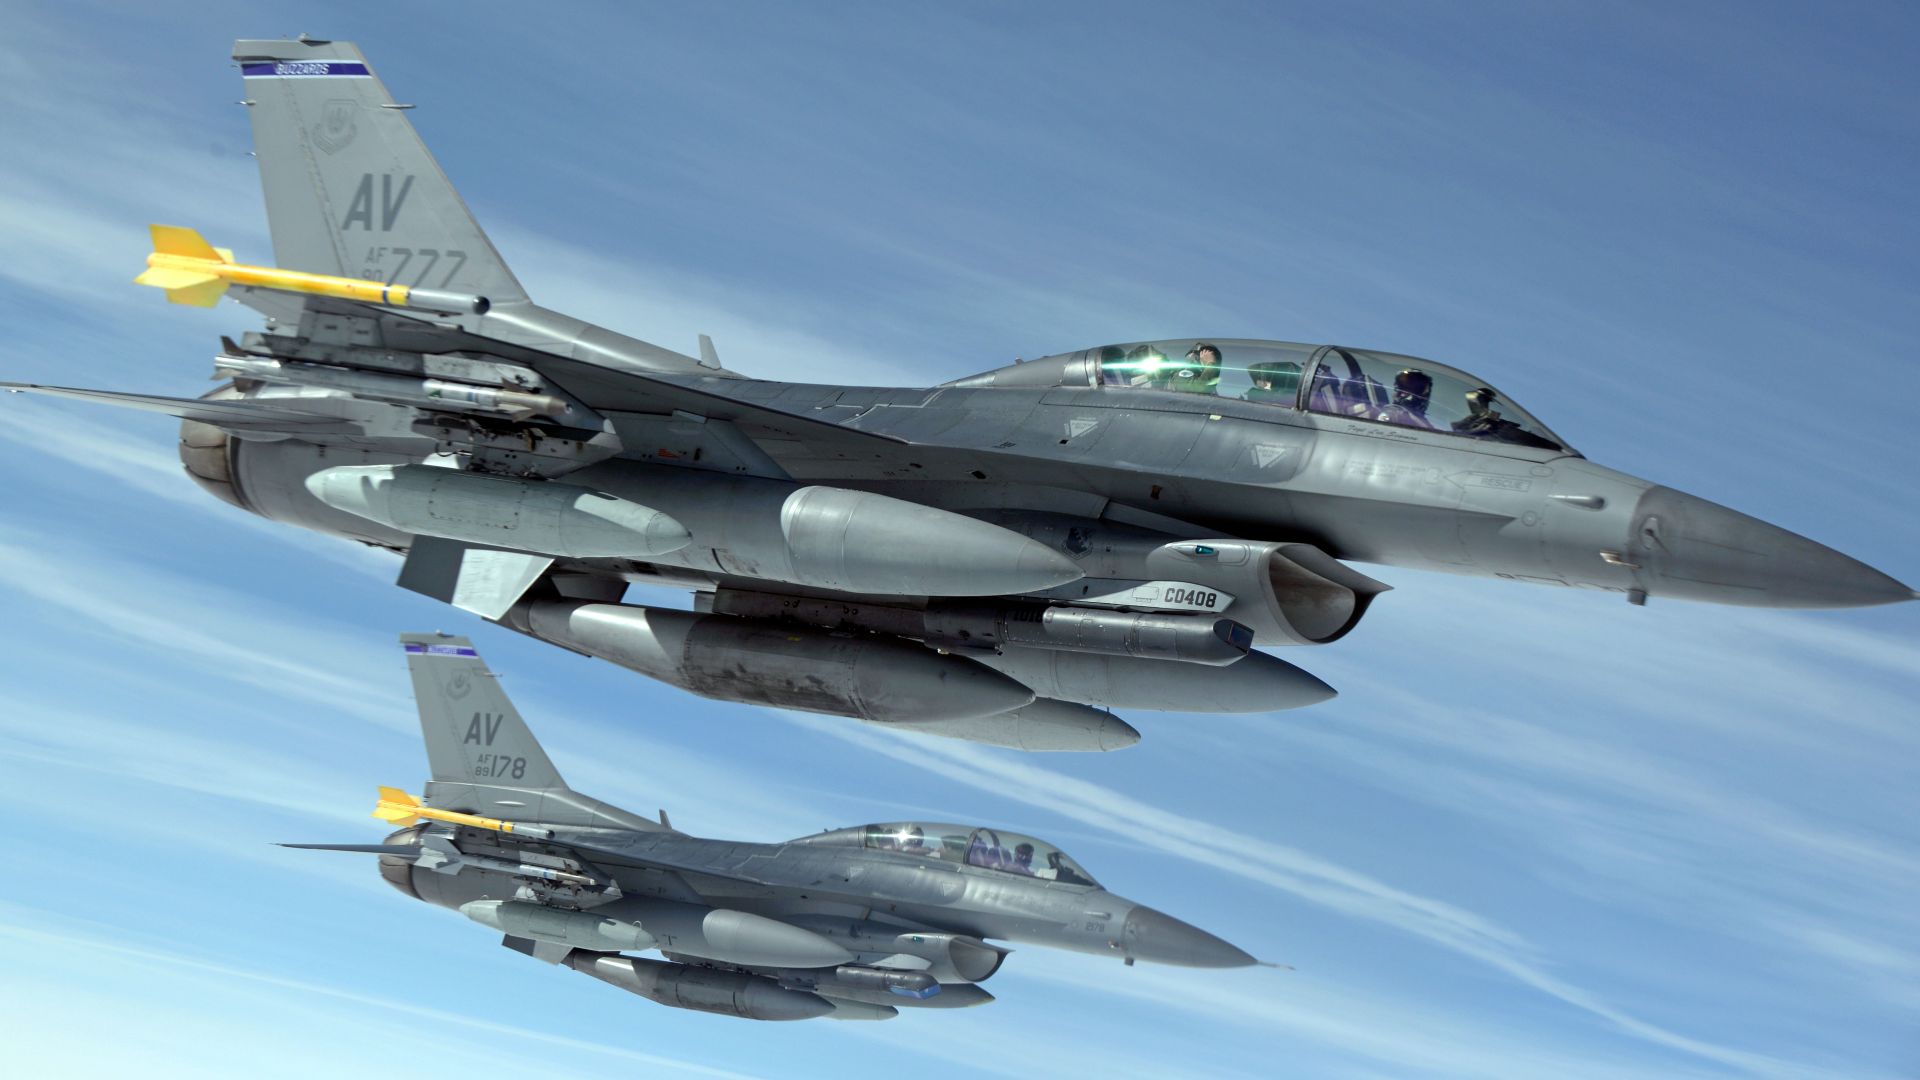 Эф-16, Файтинг Фалкон, истребитель, Армия США, Дженерал Дайнэмикс, F-16, Fighting Falcon, US Army, U.S. Air Force, General Dynamics (horizontal)